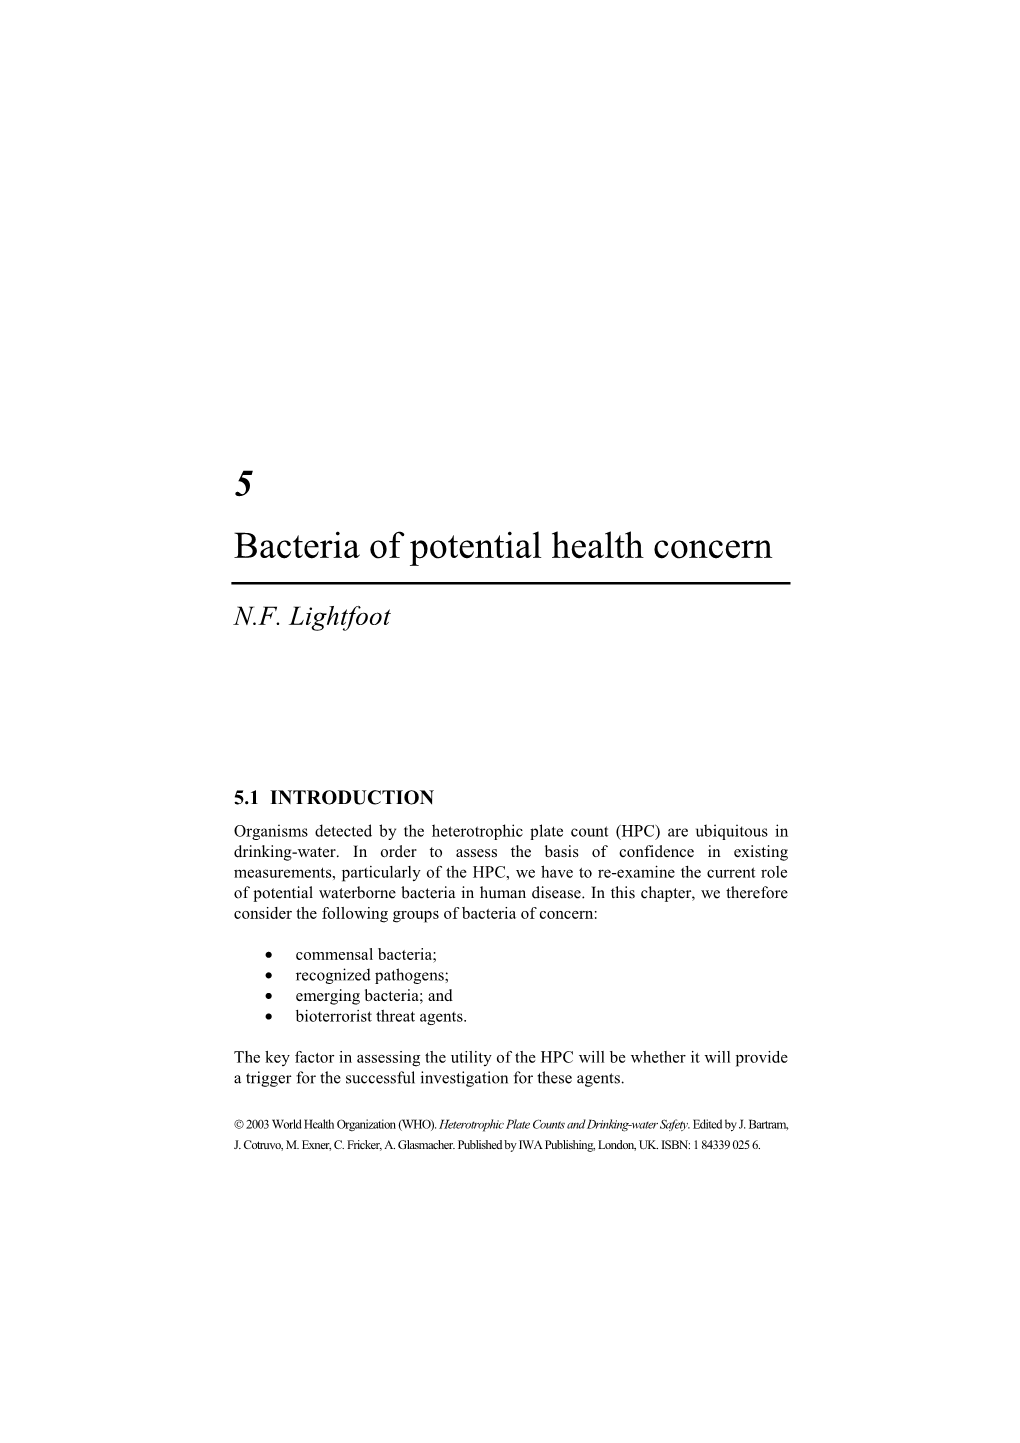 5 Bacteria of Potential Health Concern